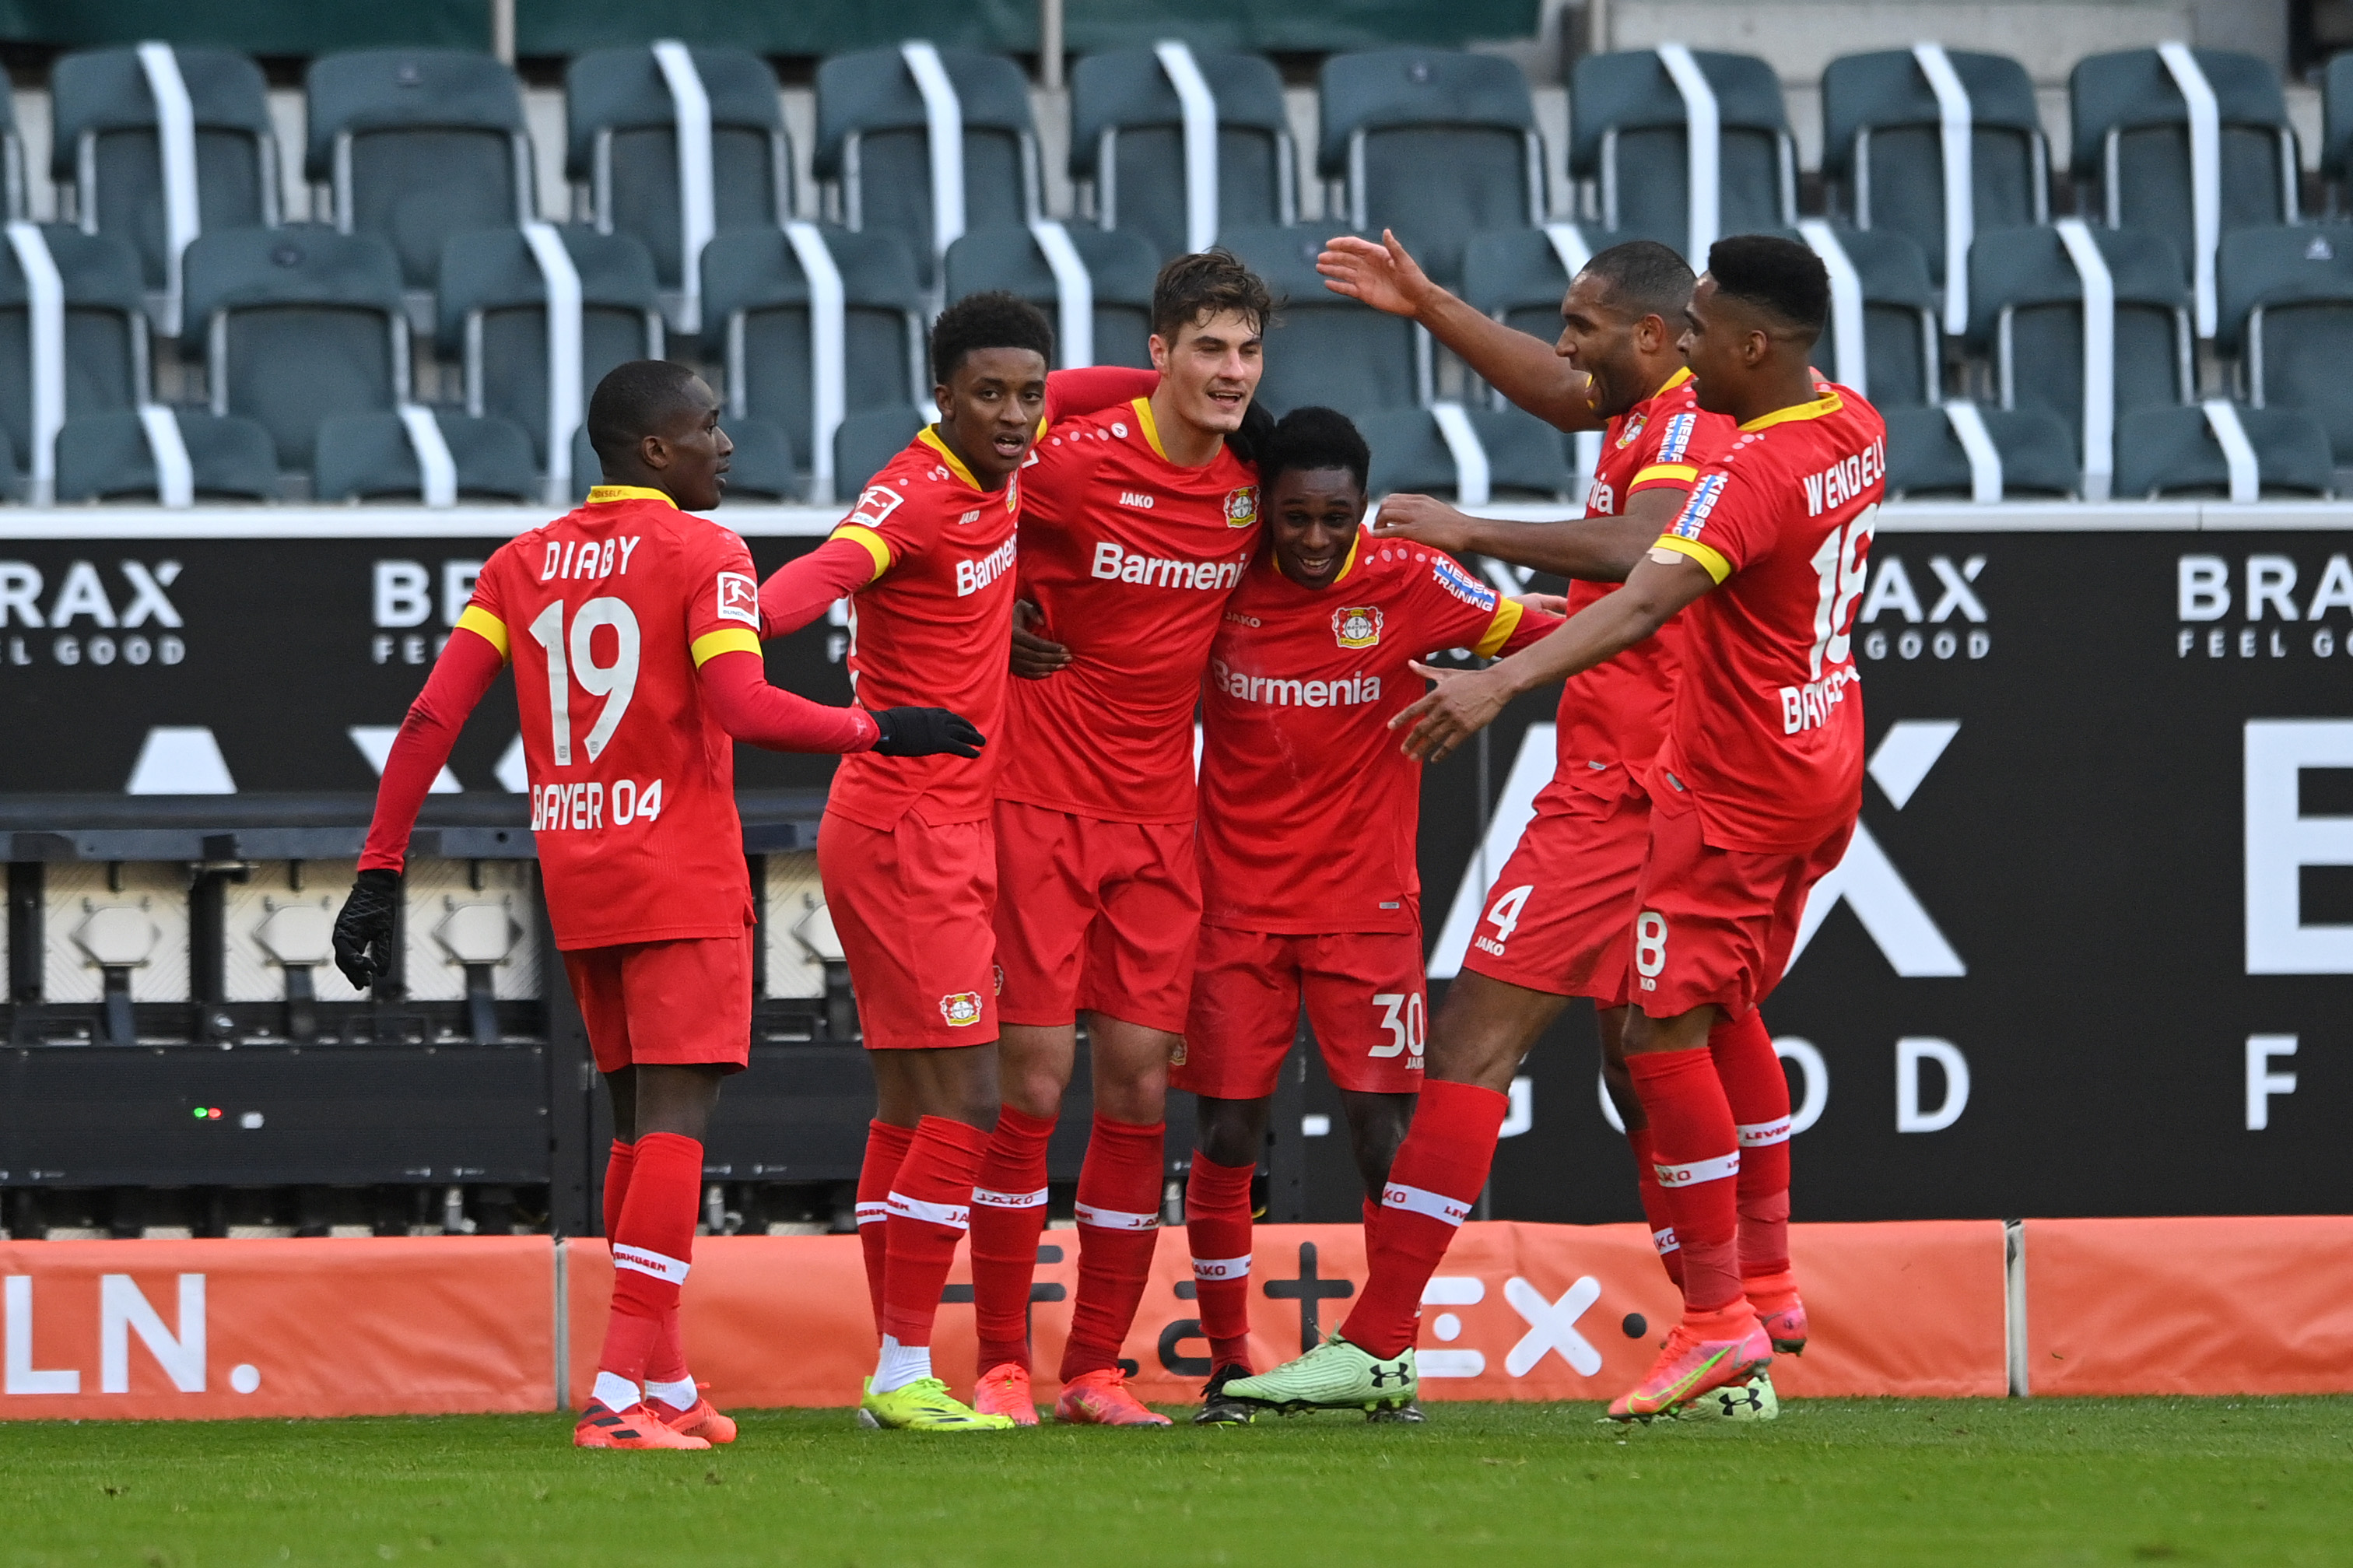  Bayer Leverkusen players celebrate a goal during a Bundesliga match.